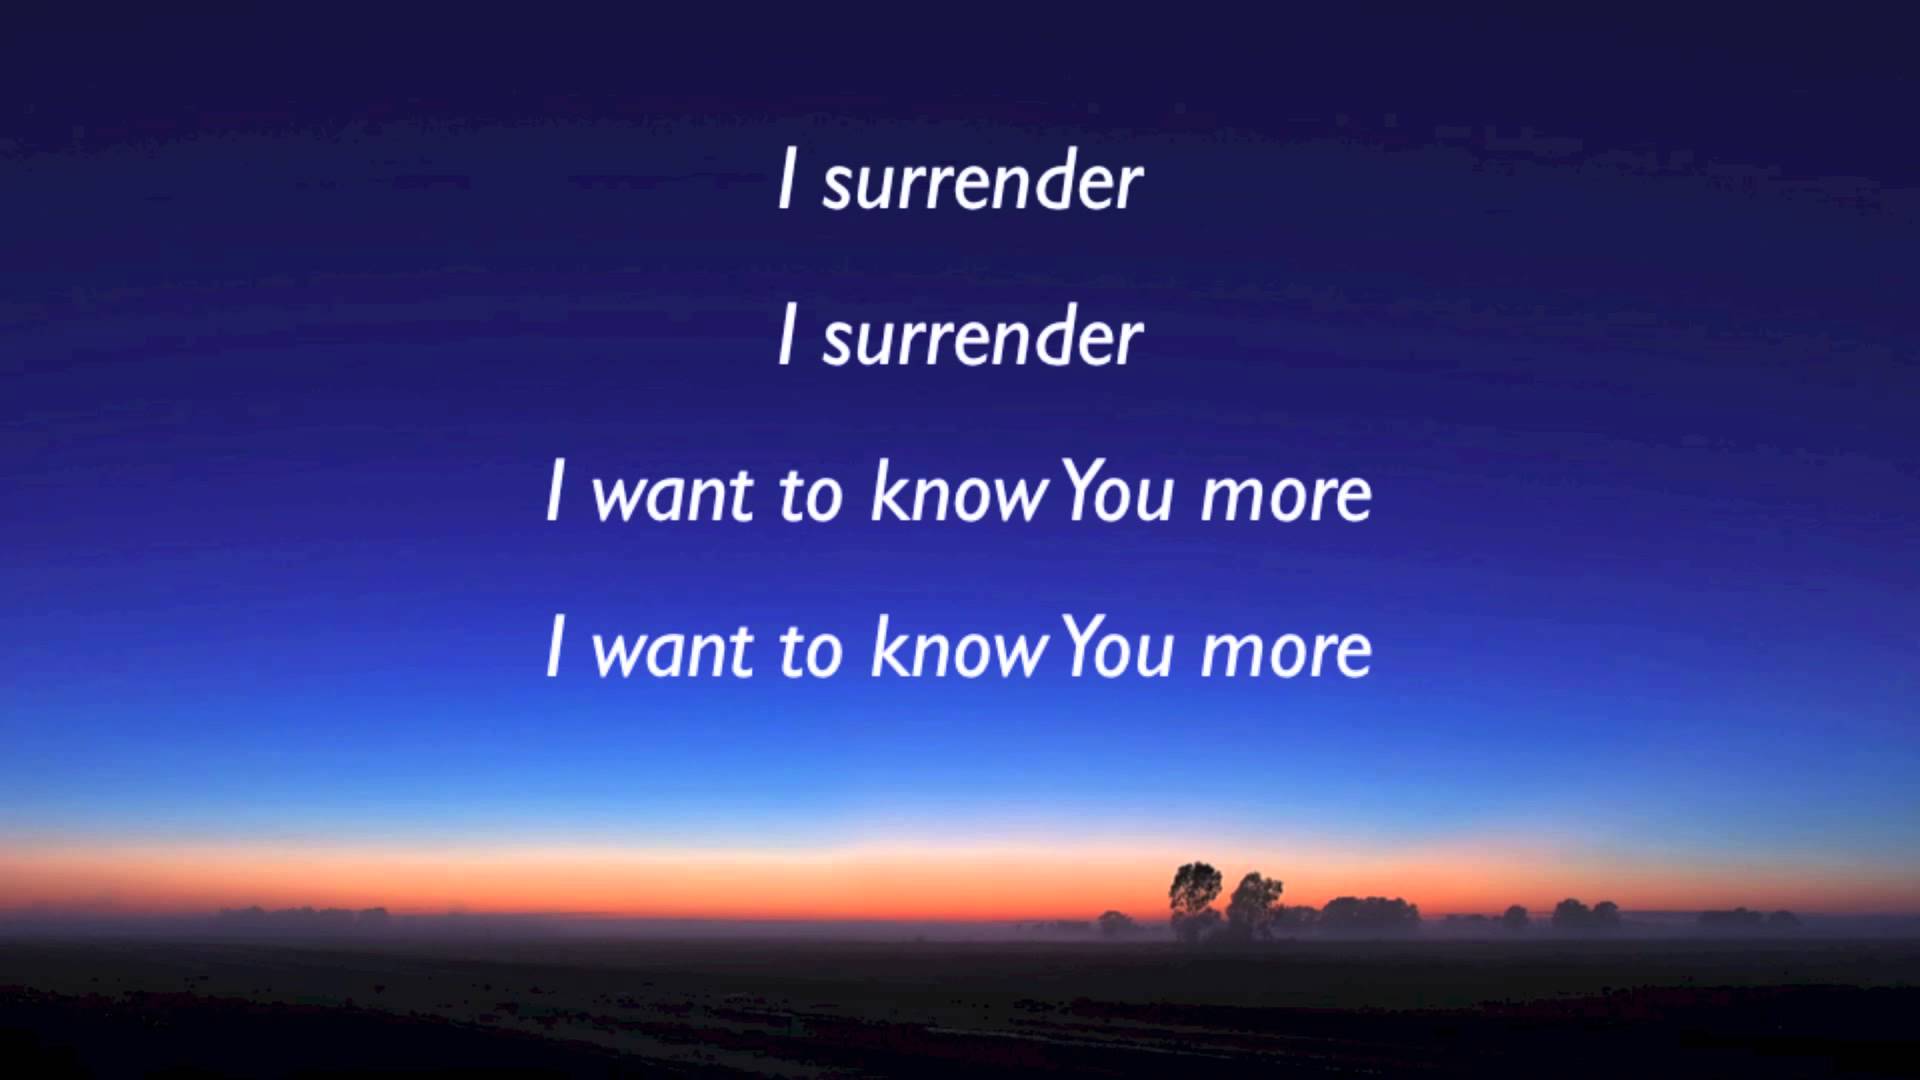 Hillsong - I Surrender with lyrics - YouTube